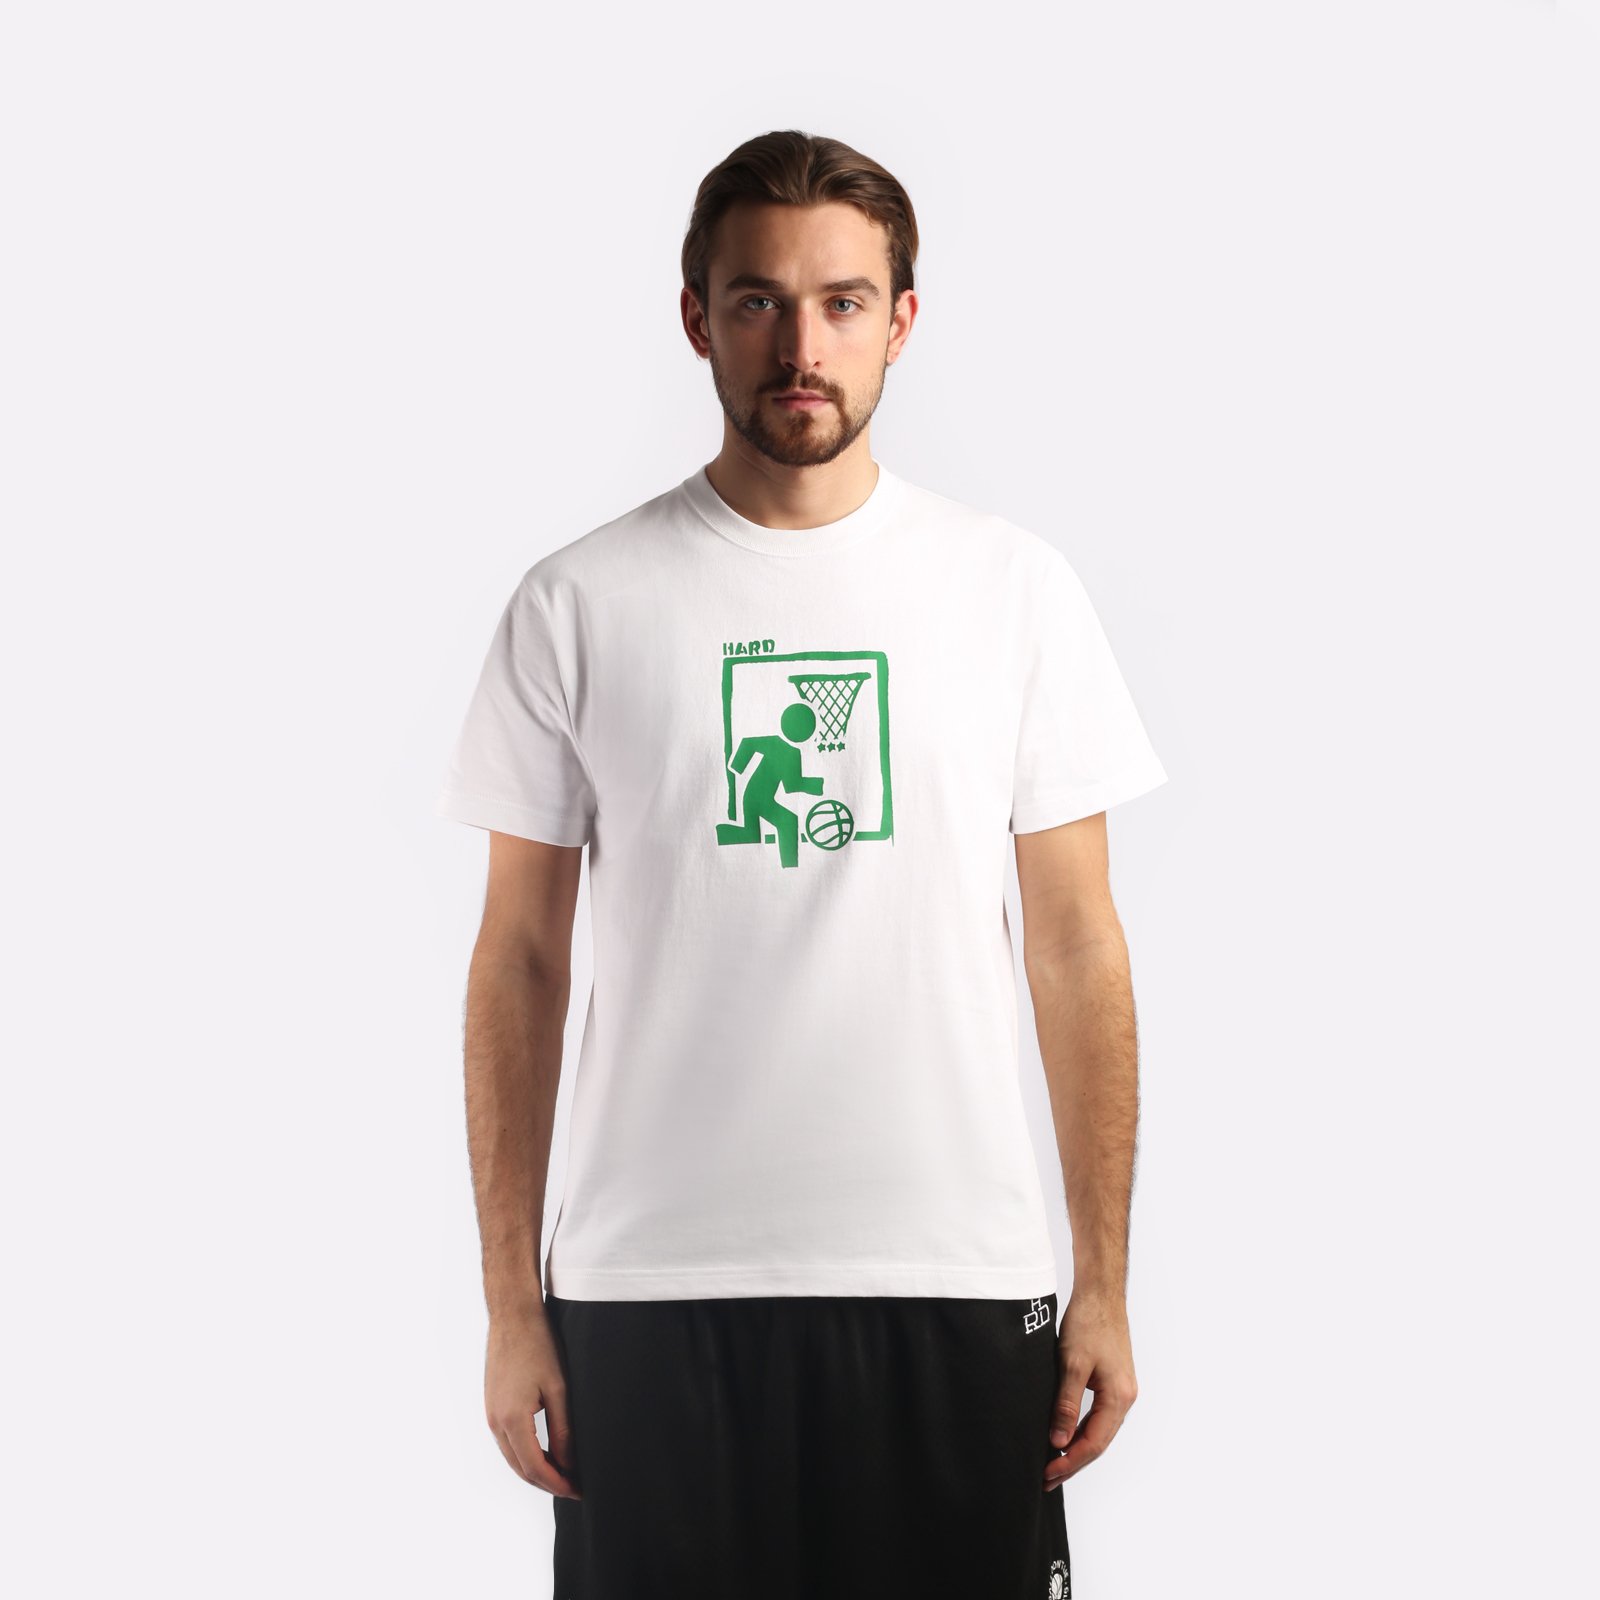 мужская бежевая футболка Hard Simple Tee Hrdtee-white - цена, описание, фото 1